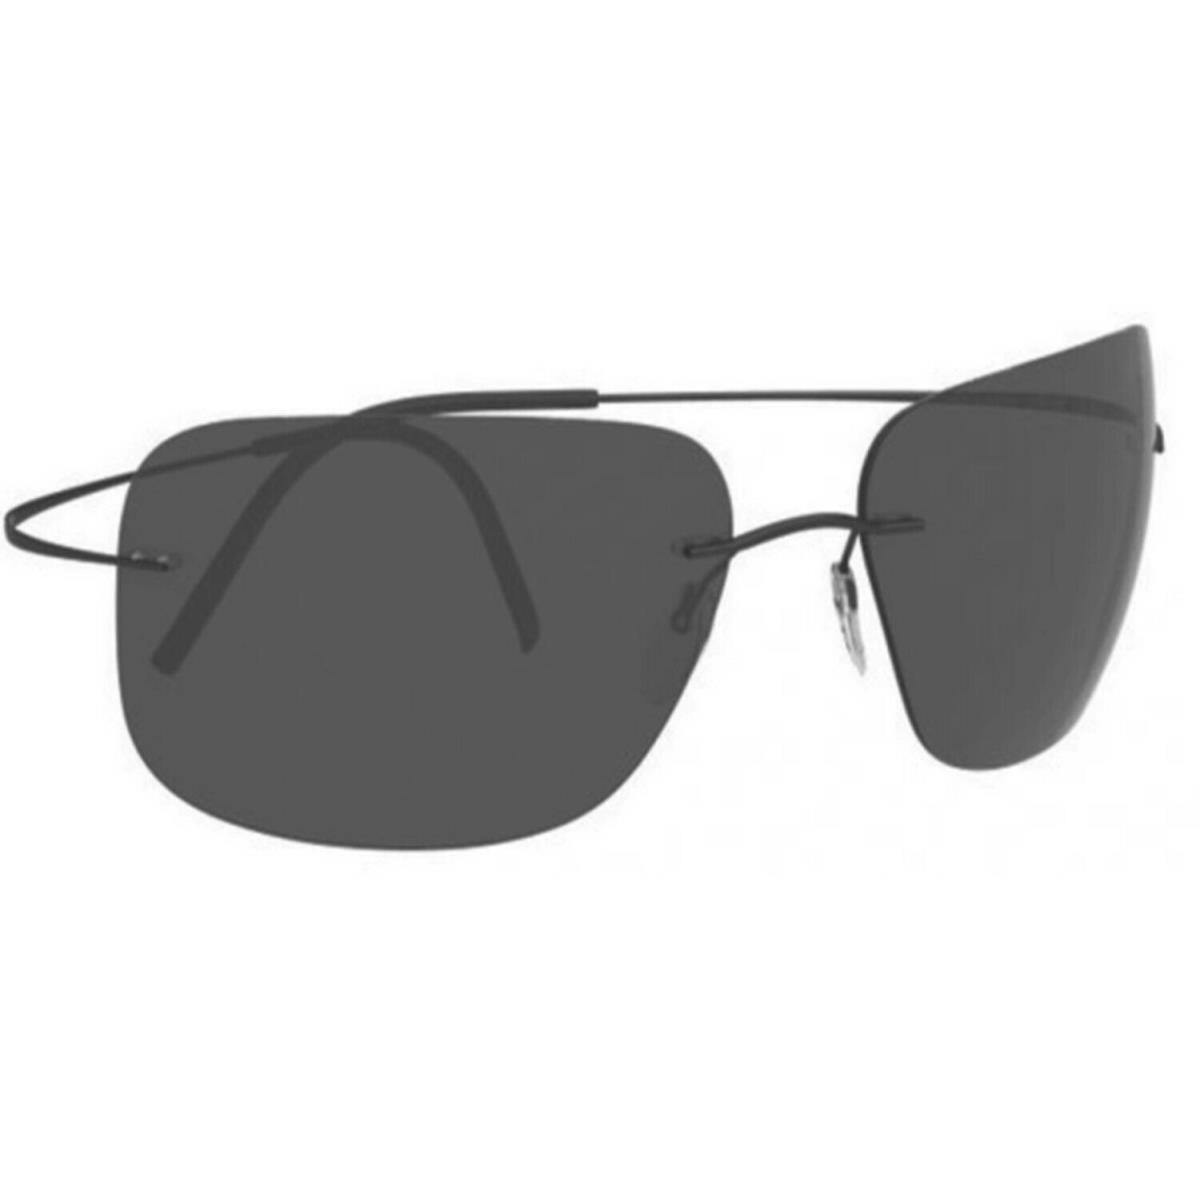 Silhouette Sunglasses Tma Ultra Thin 64/17/135 Polarized Grey 8723/75-9140